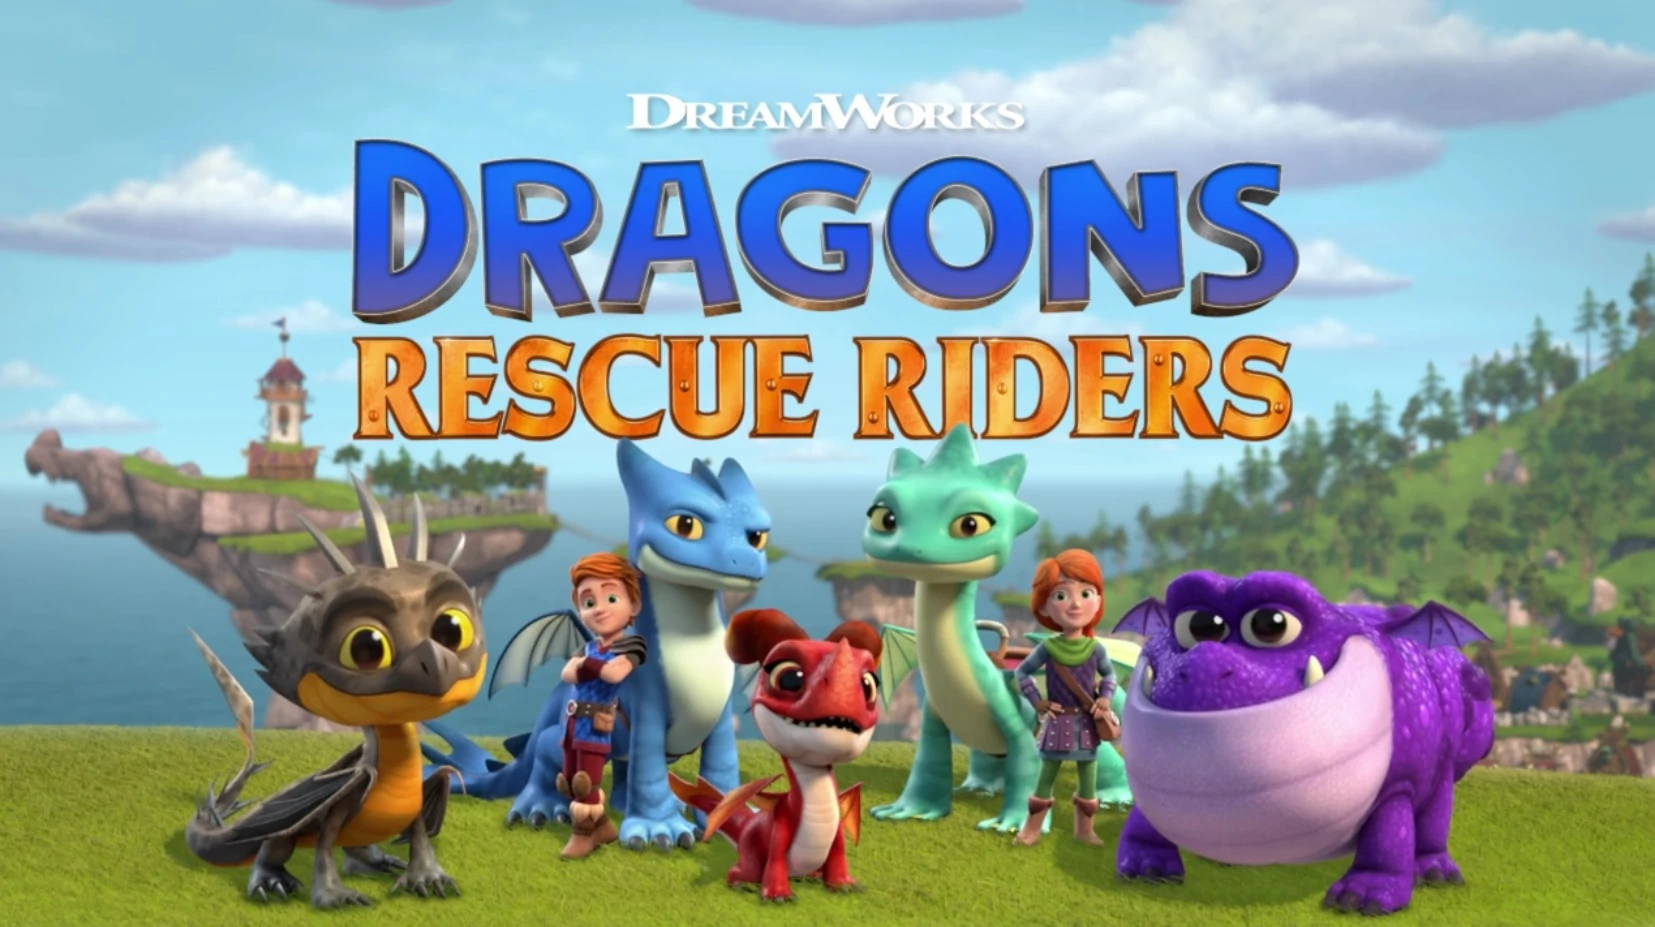 Dreamworks dragons rescue riders season 4